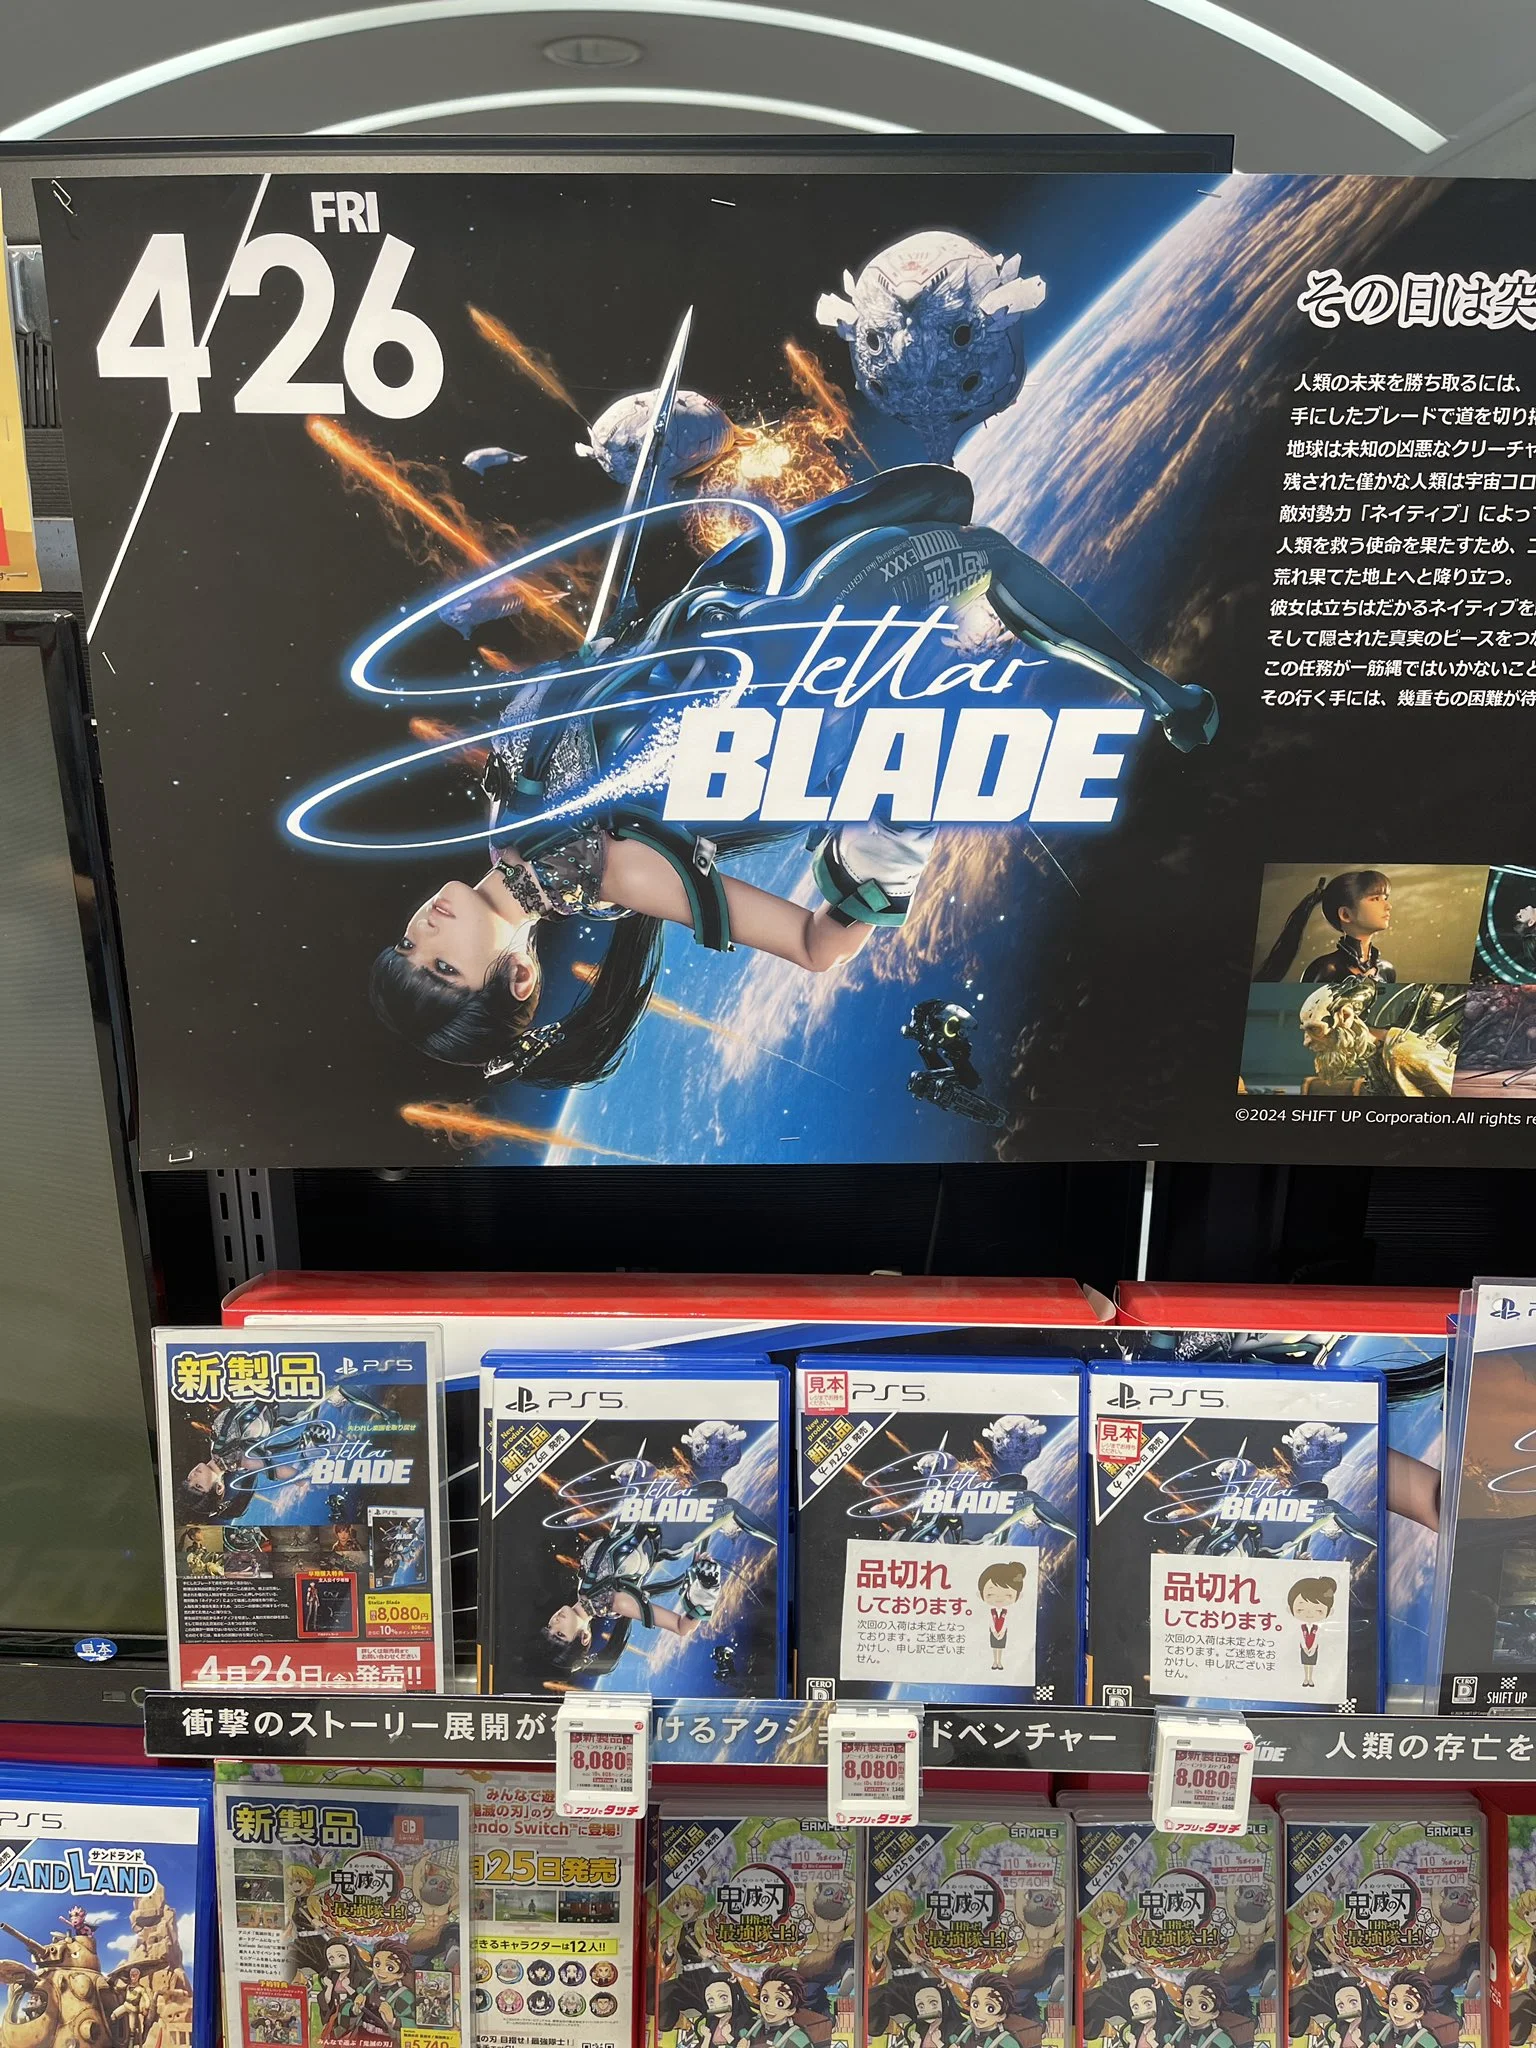 Японцы столкнулись с нехваткой дисковых копий Stellar Blade - фото 1